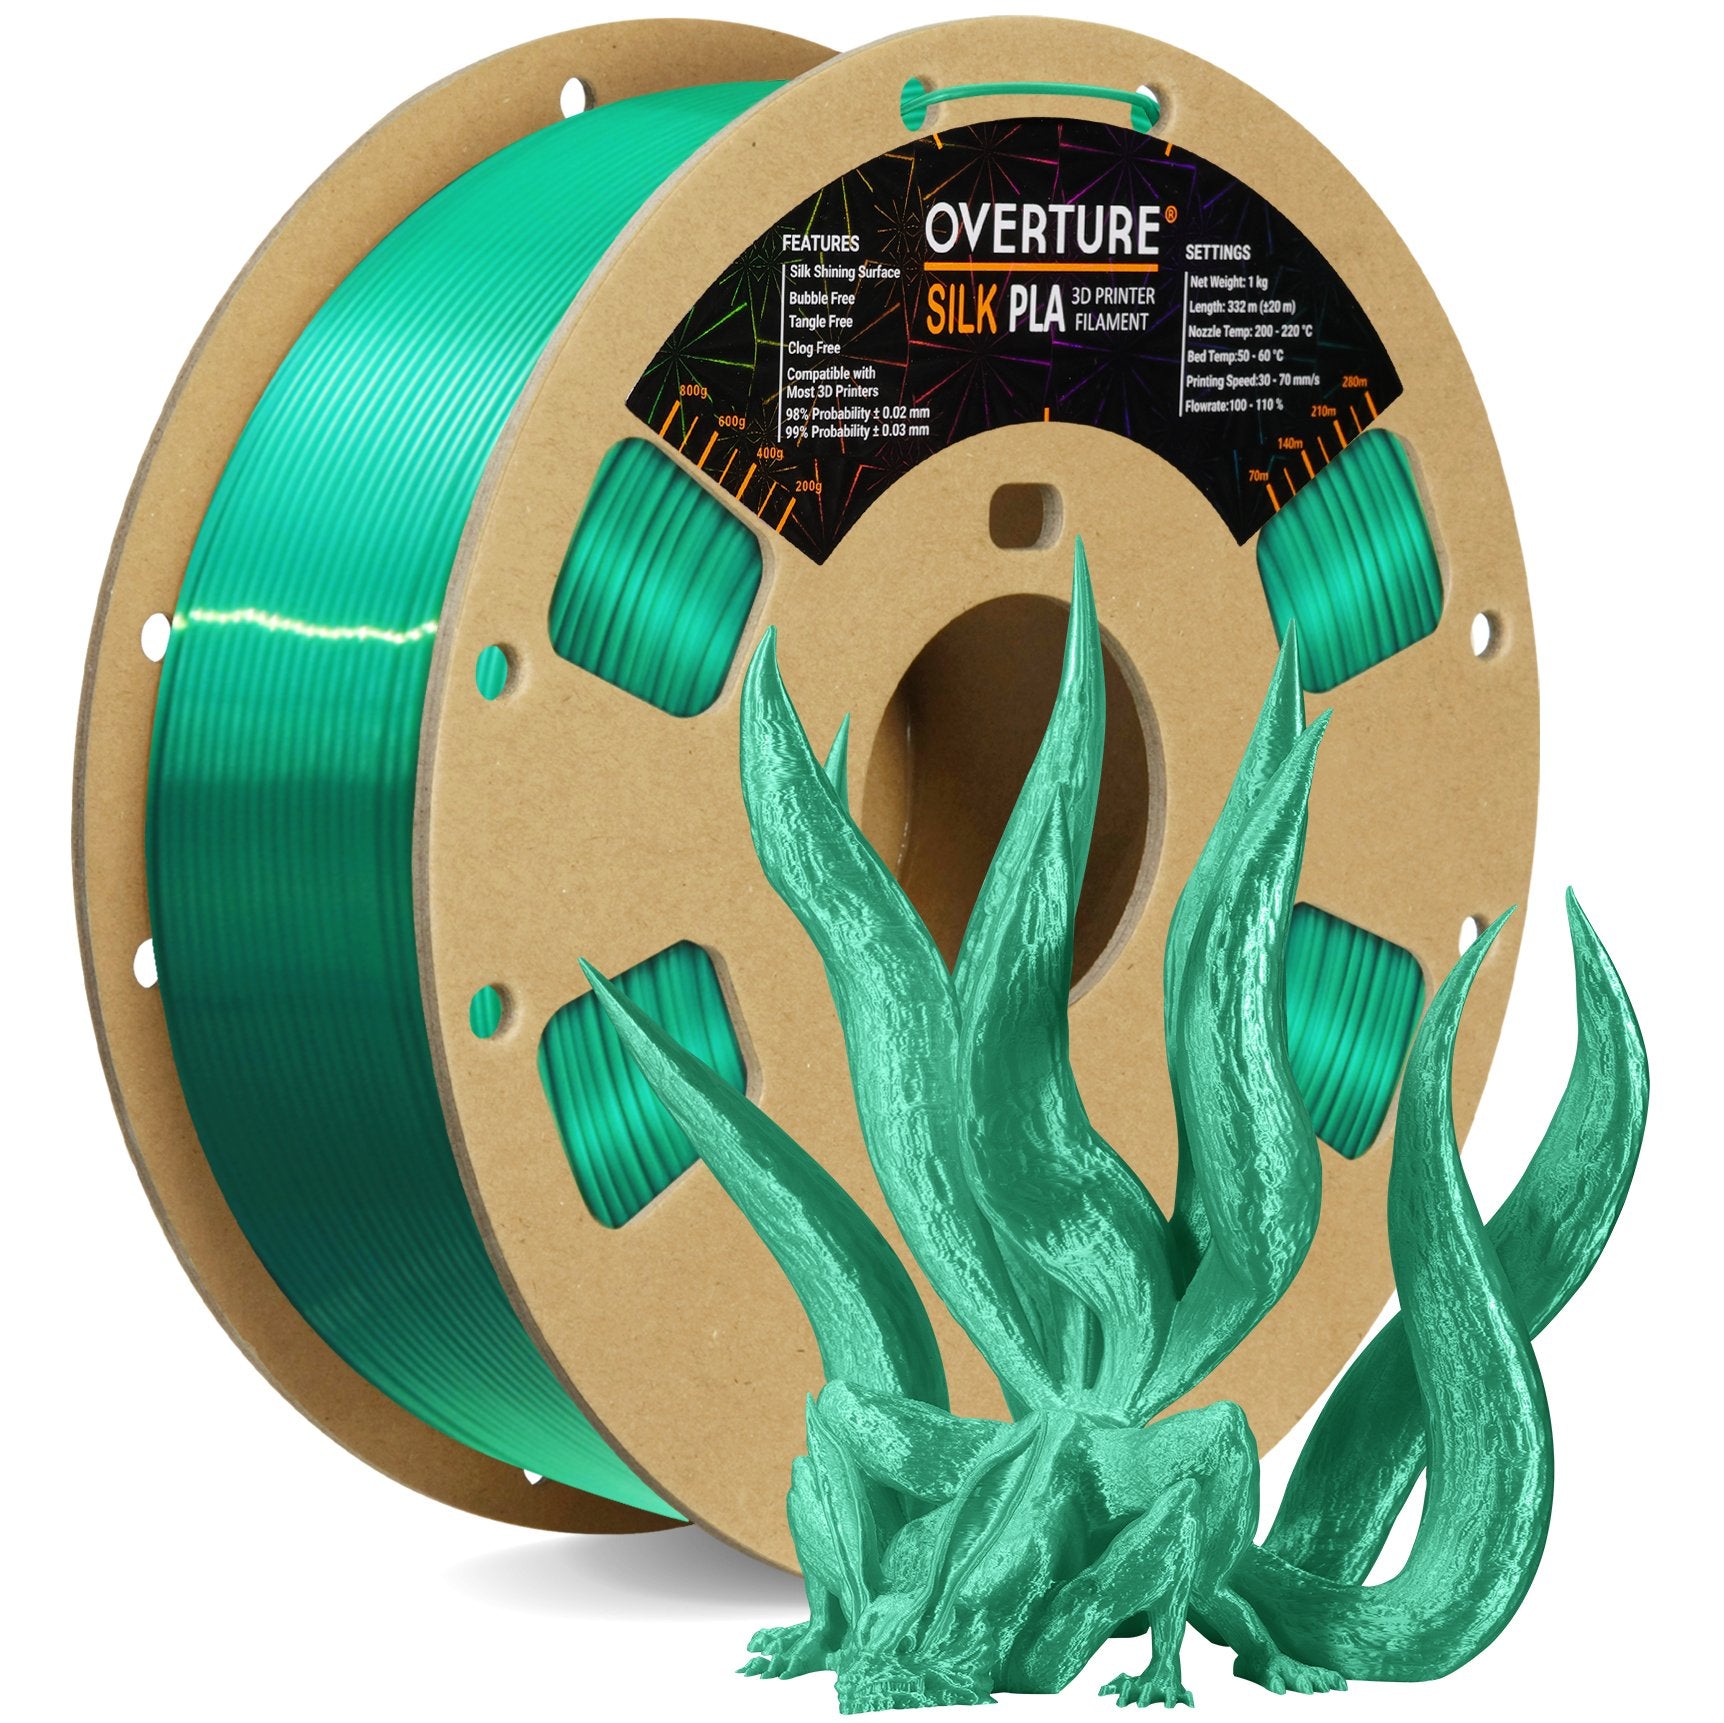 Silk PLA 3D printer filament brings a refined beauty to PLA.